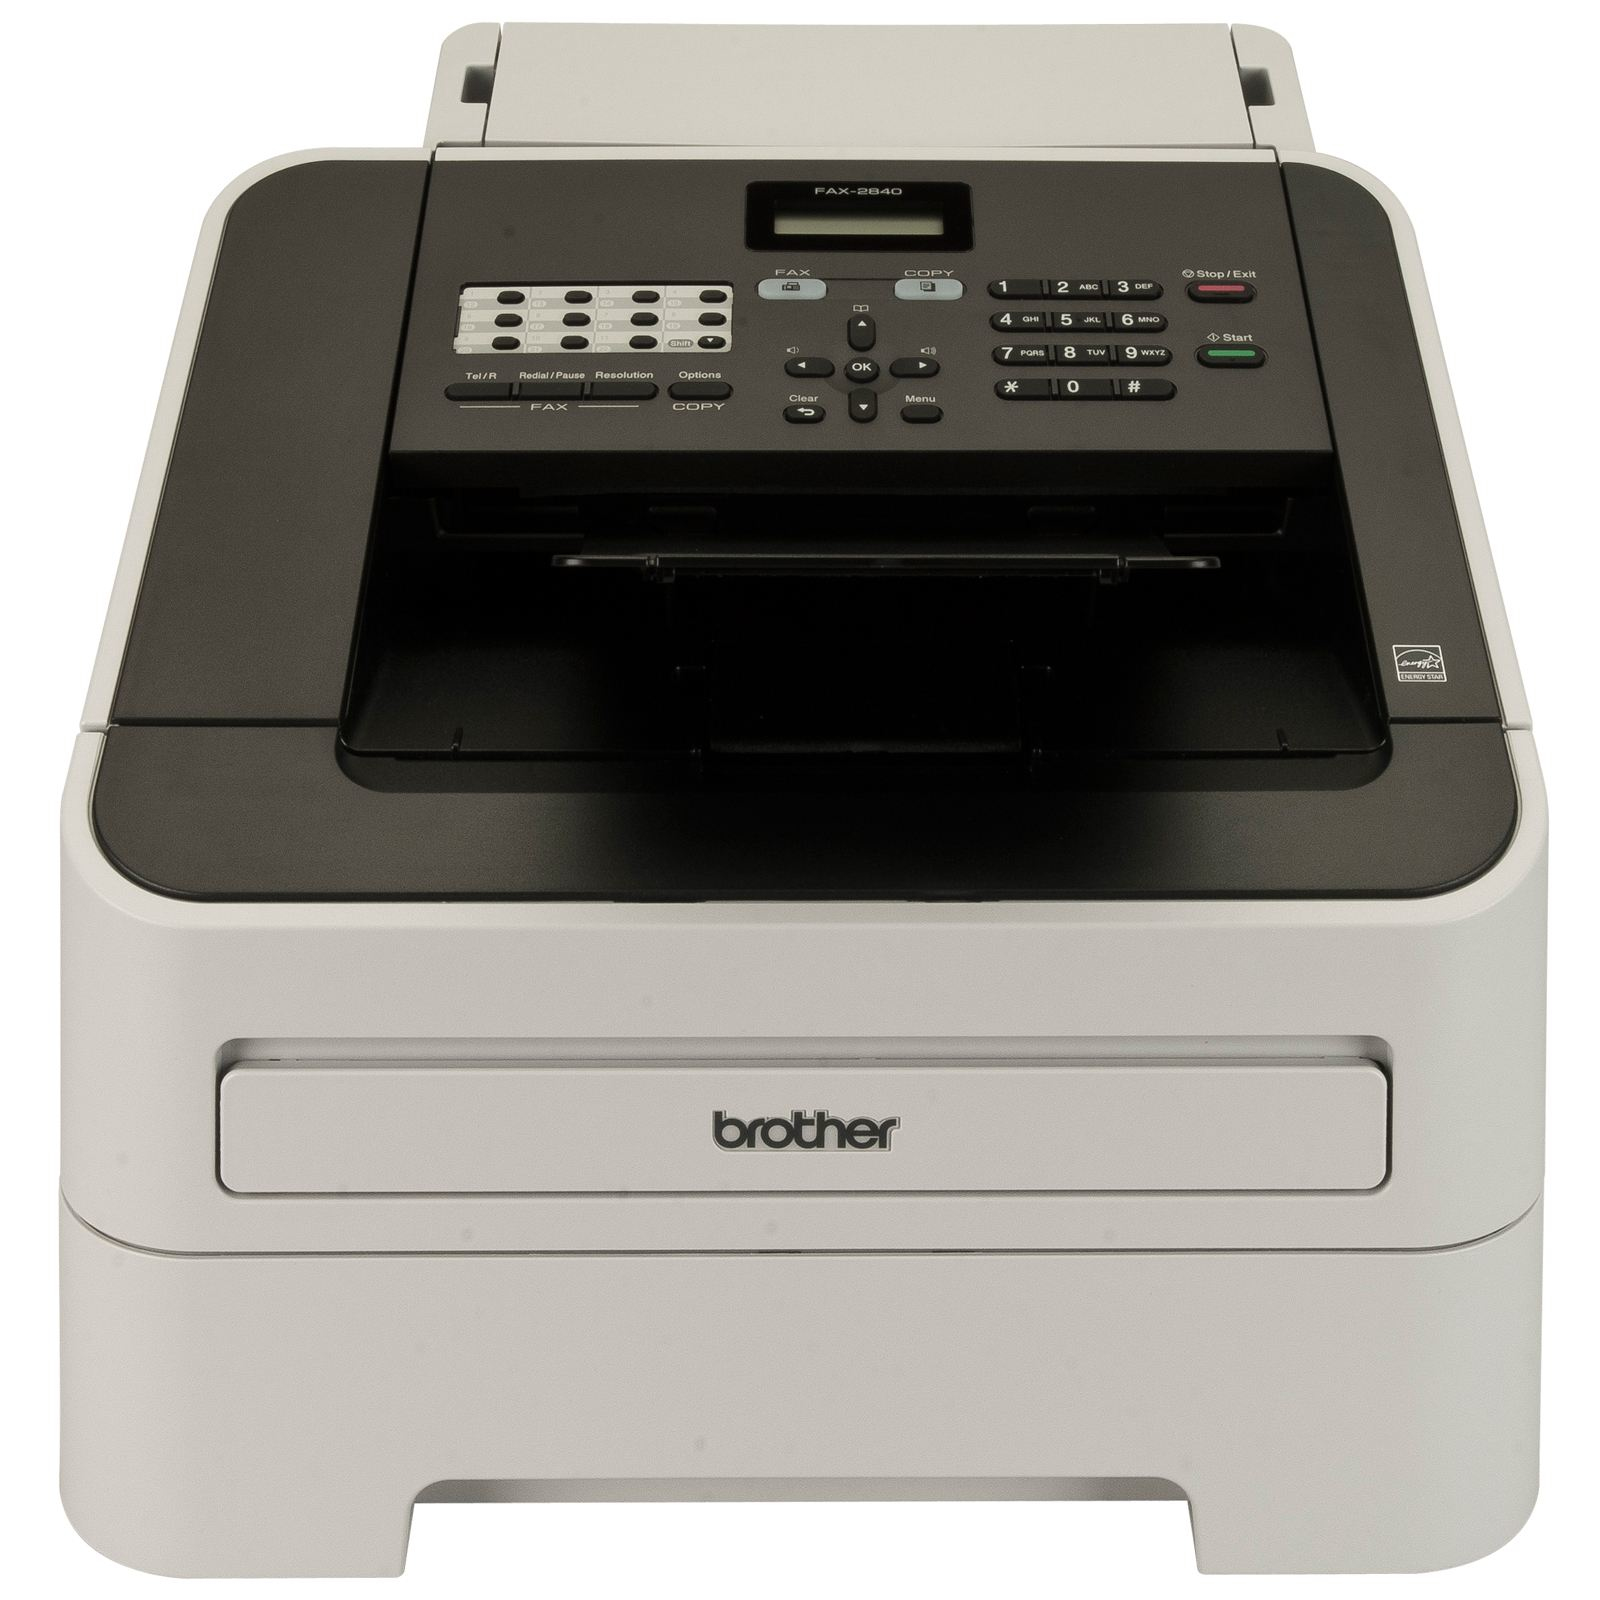 Brother - Fax                    Fax-2840 Laser Fax/copier                                            En Fax2840zu1